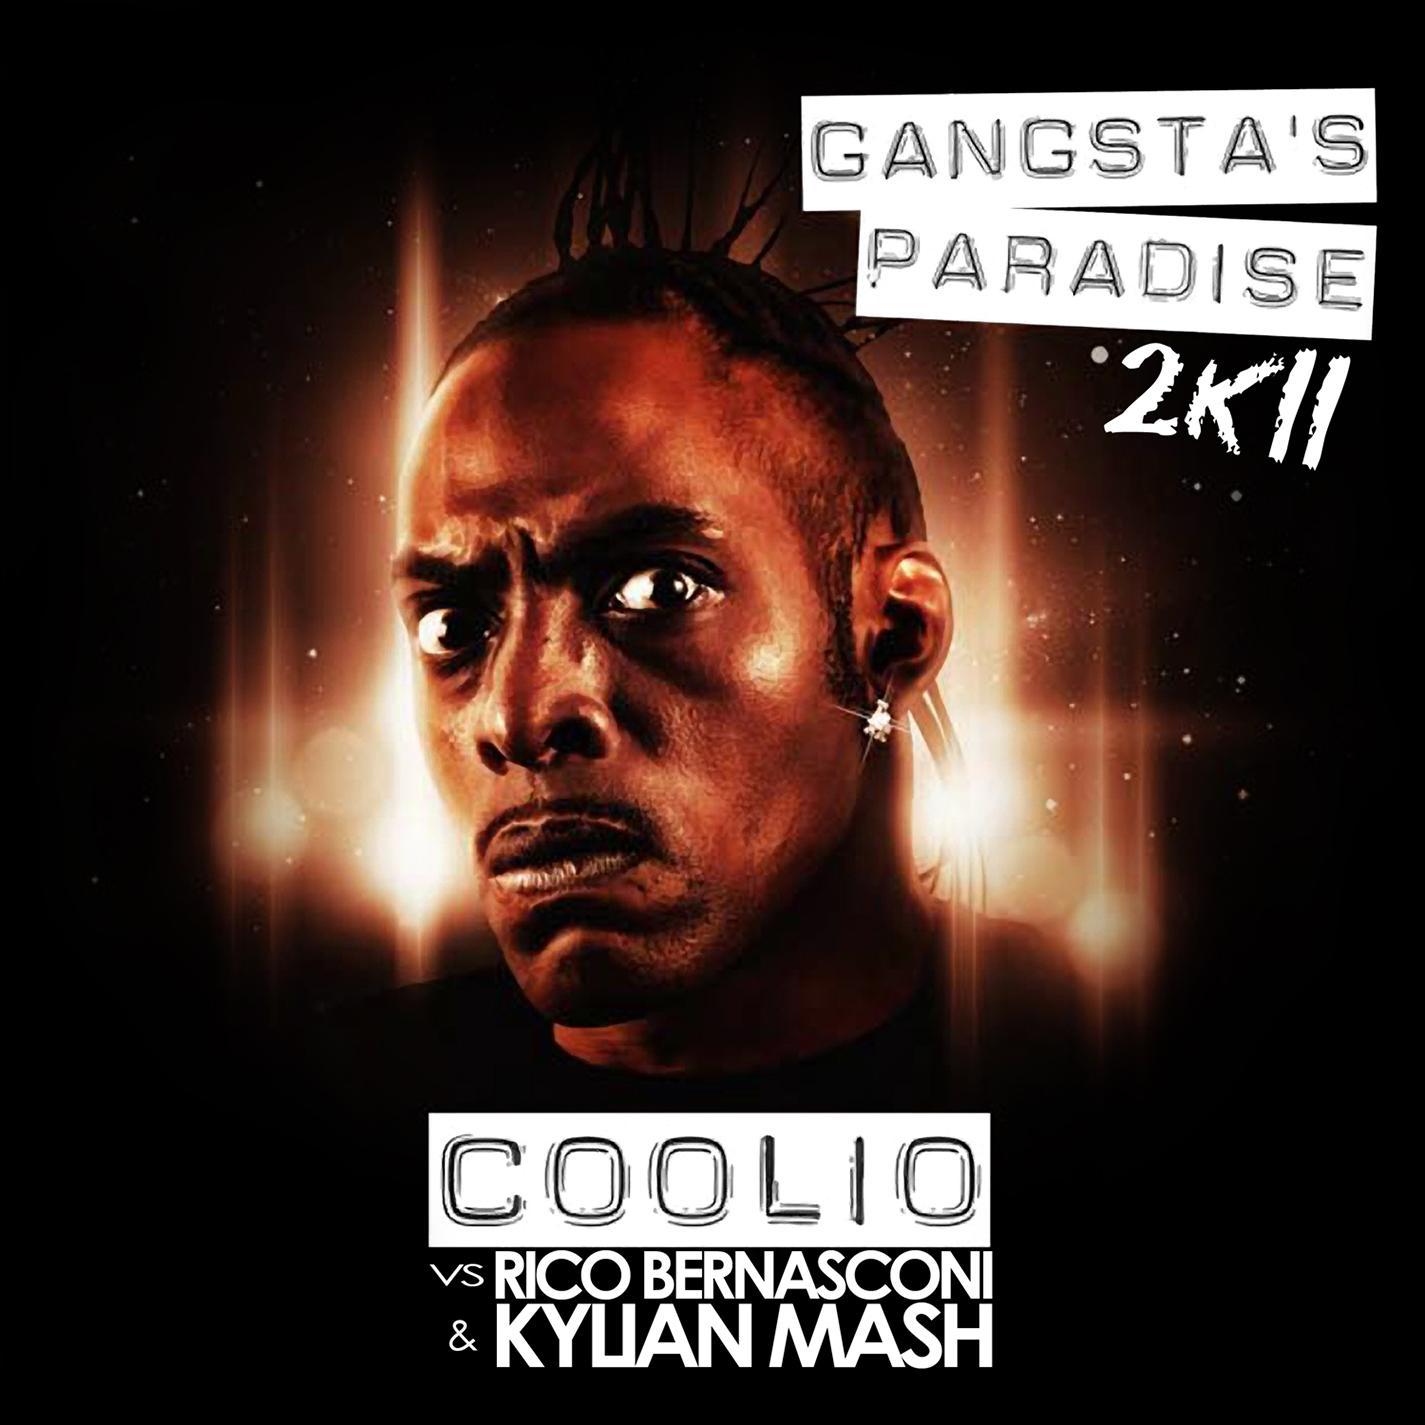 Coolio - Gangsta's Paradise 2k11 (Coolio vs Rico Bernasconi & Kylian Mash) (Bernasconi & Farenthide Instrumental Remix)